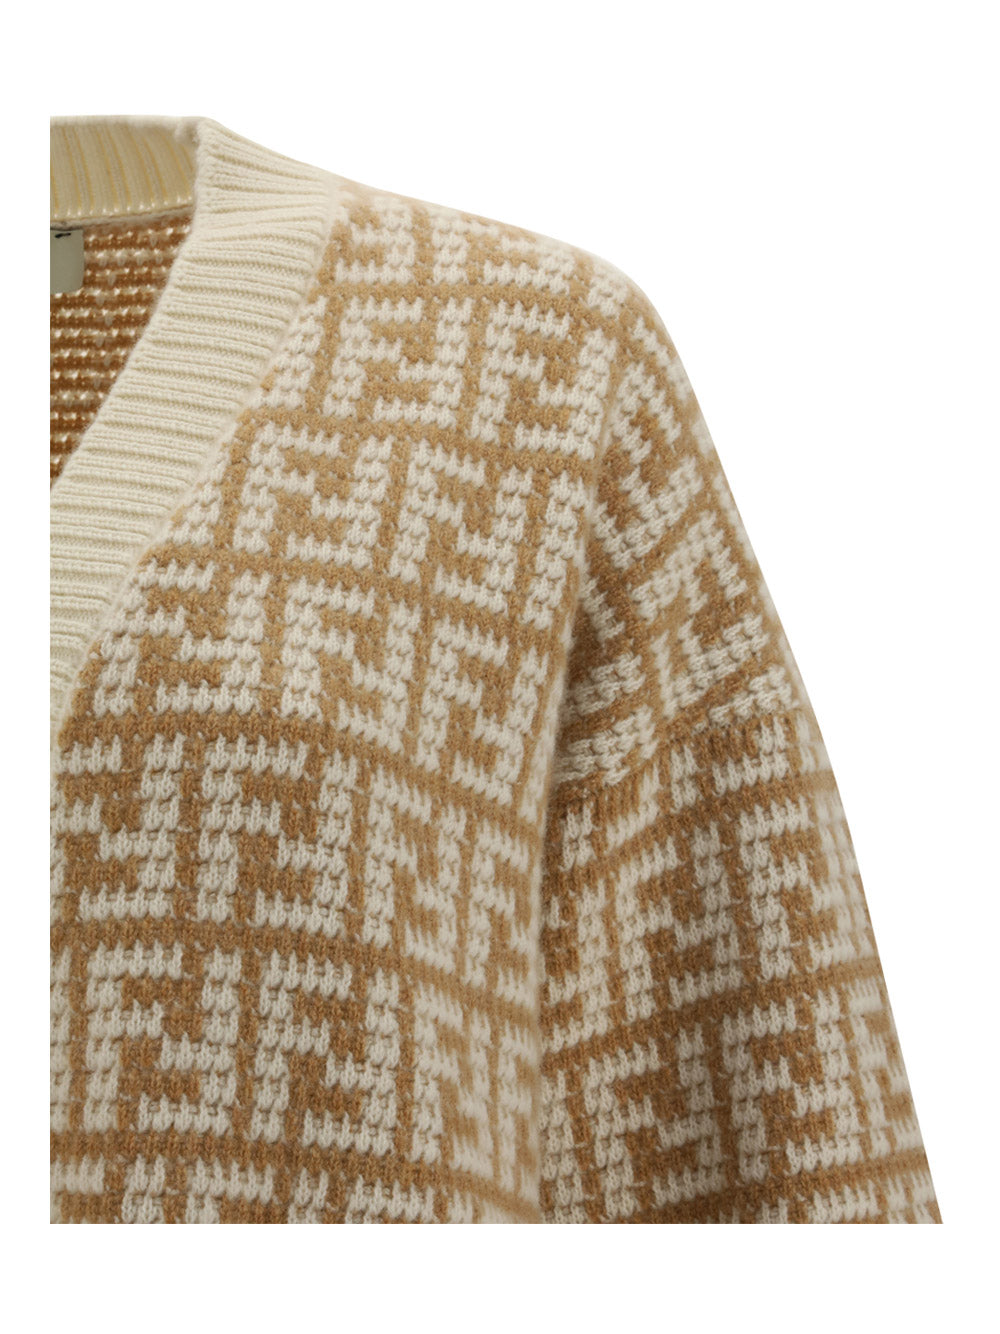 Ff Crocheted Cashmere Cardigan - Beige